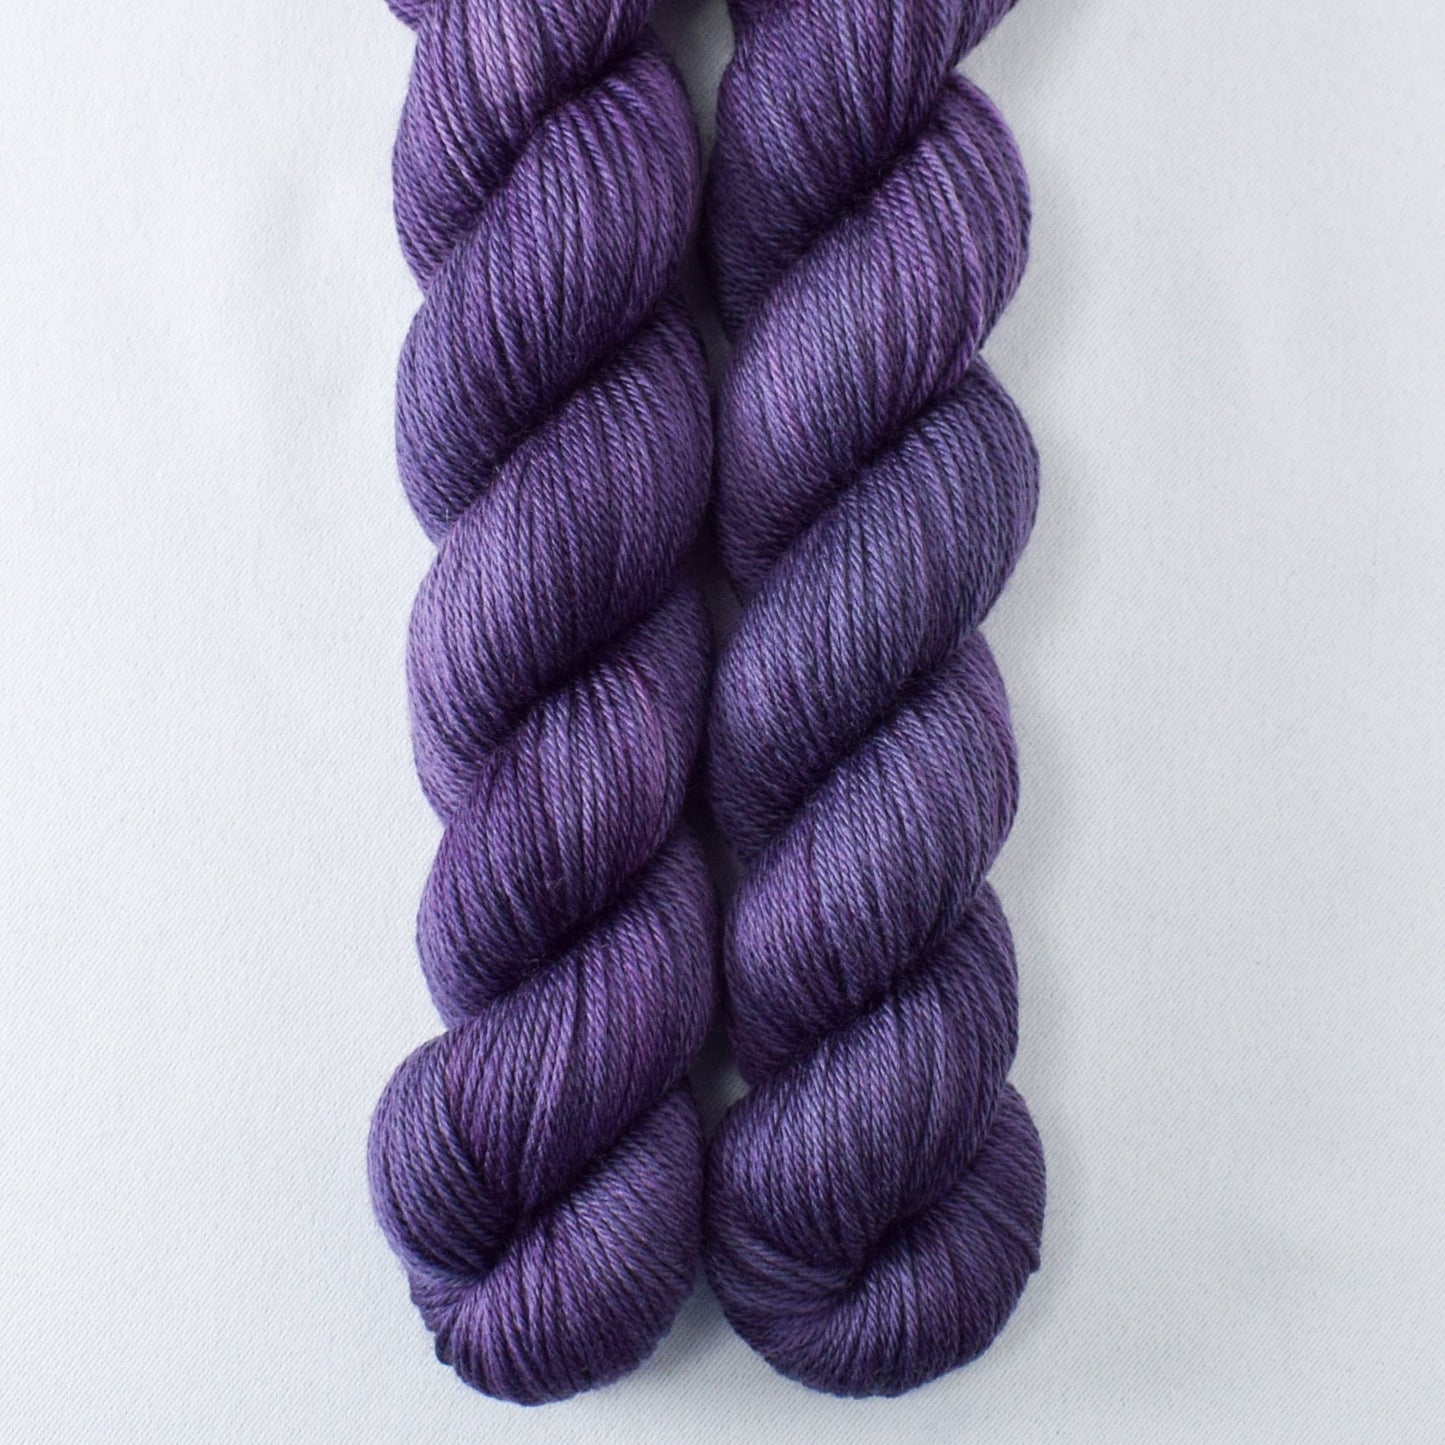 Concord Grapes - Miss Babs Yowza Mini yarn